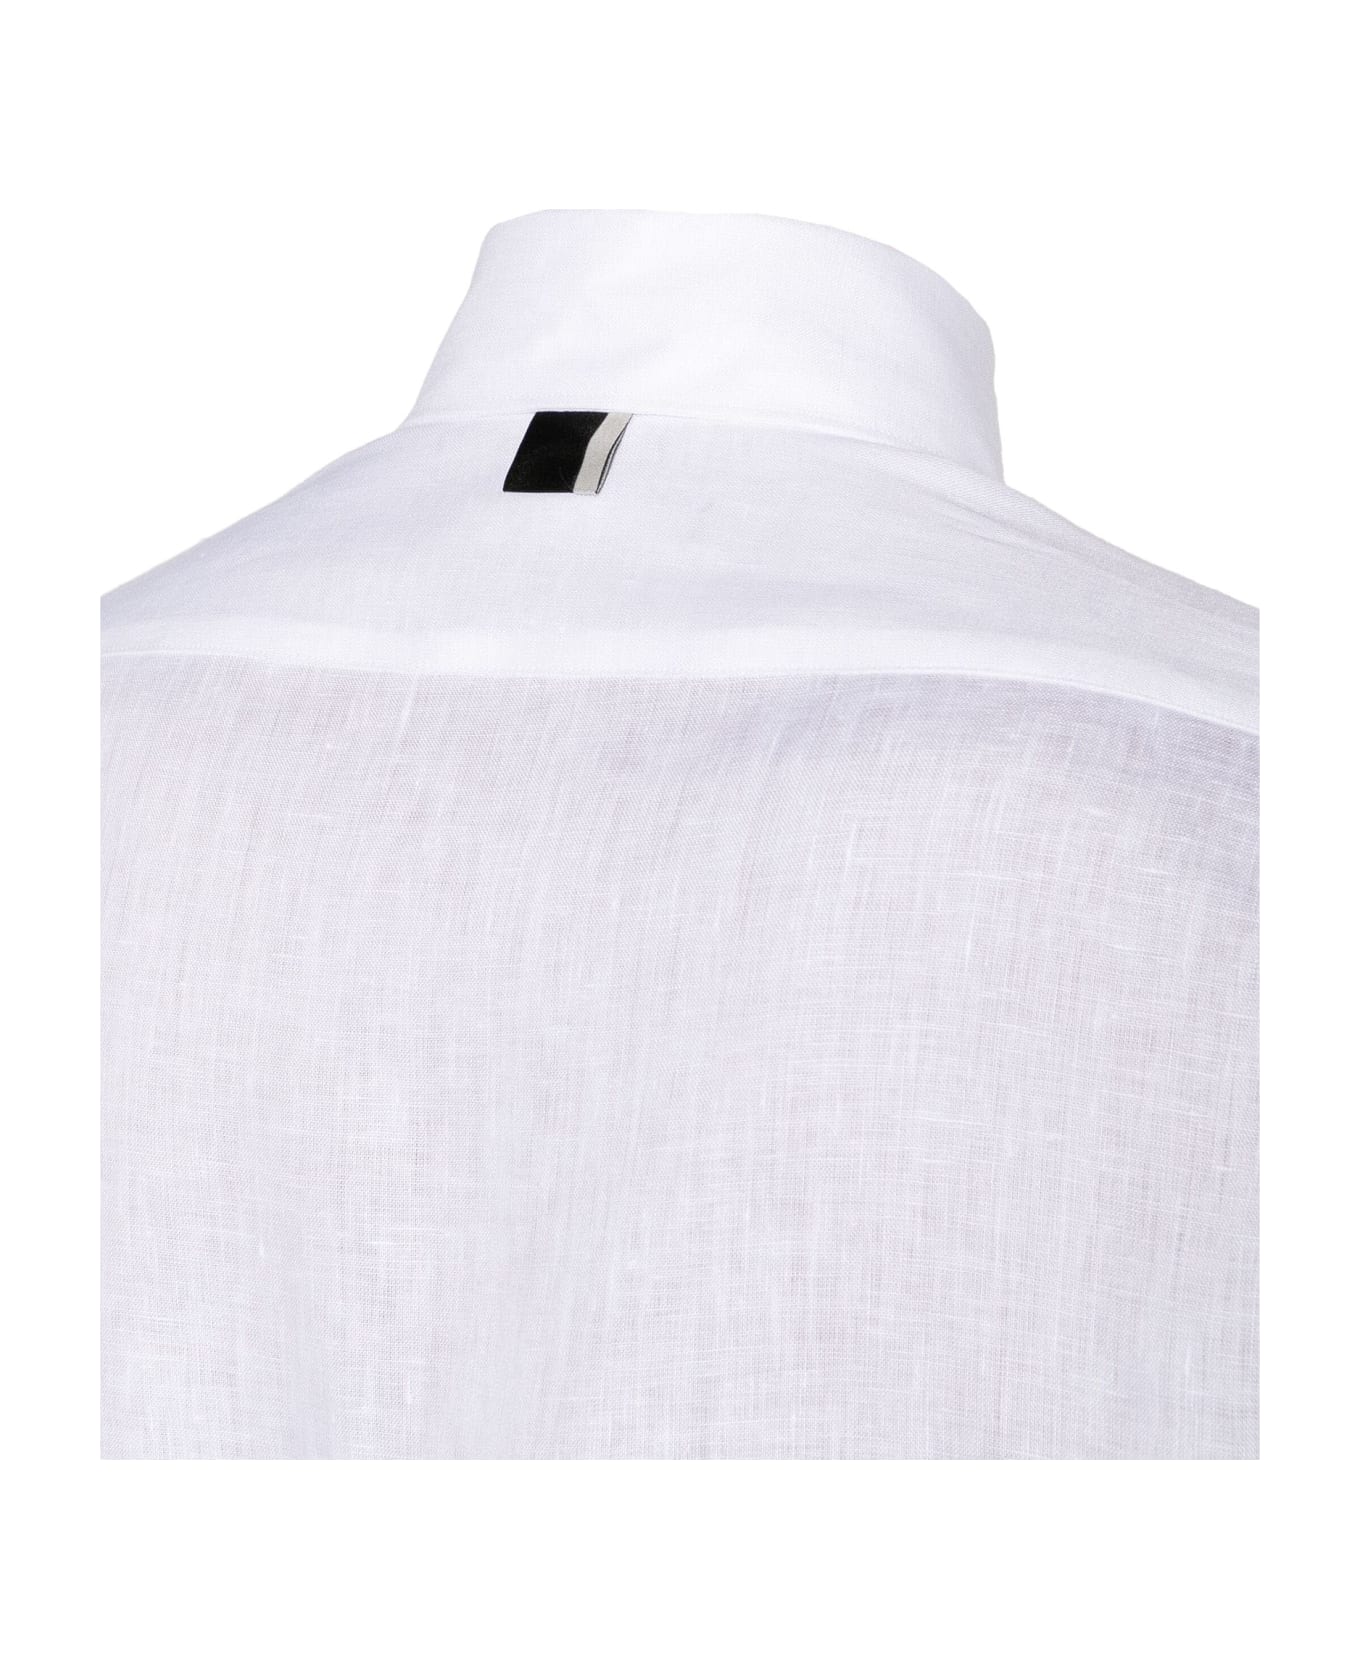 Low Brand Shirts White - White シャツ